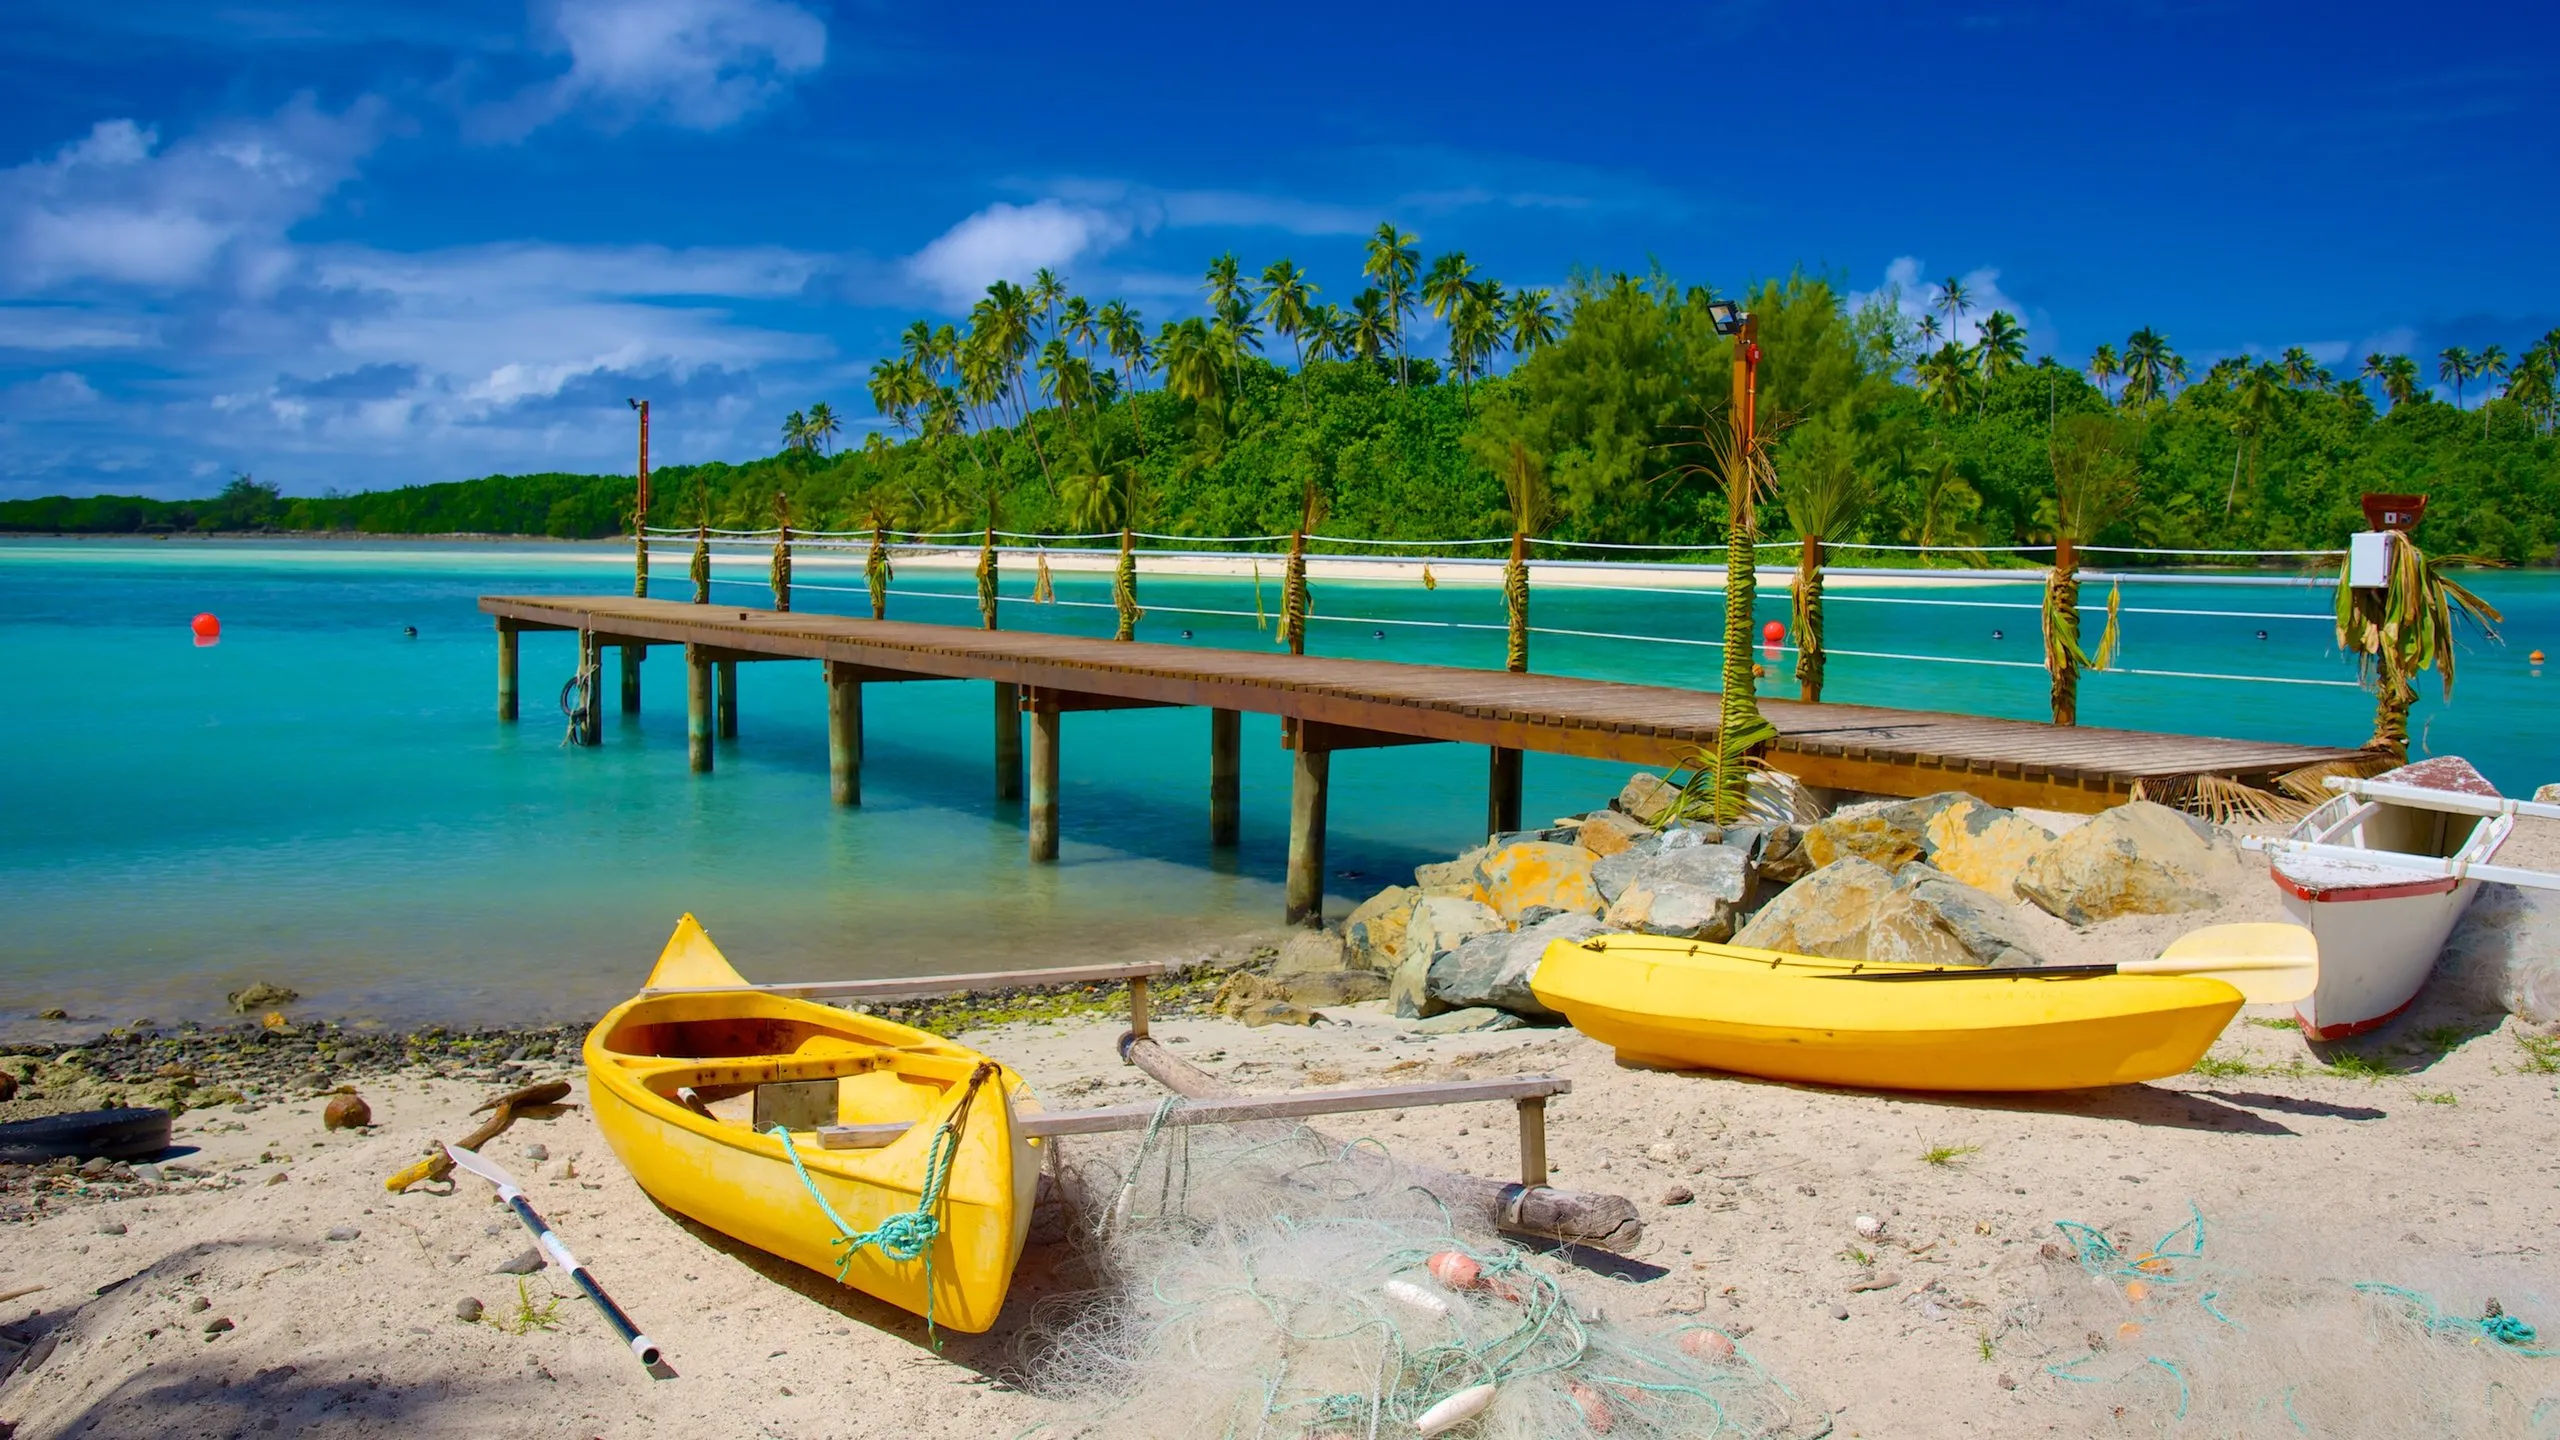 Muri Beach in Cook Islands, Australia and Oceania | Beaches,Kayaking & Canoeing - Rated 4.8